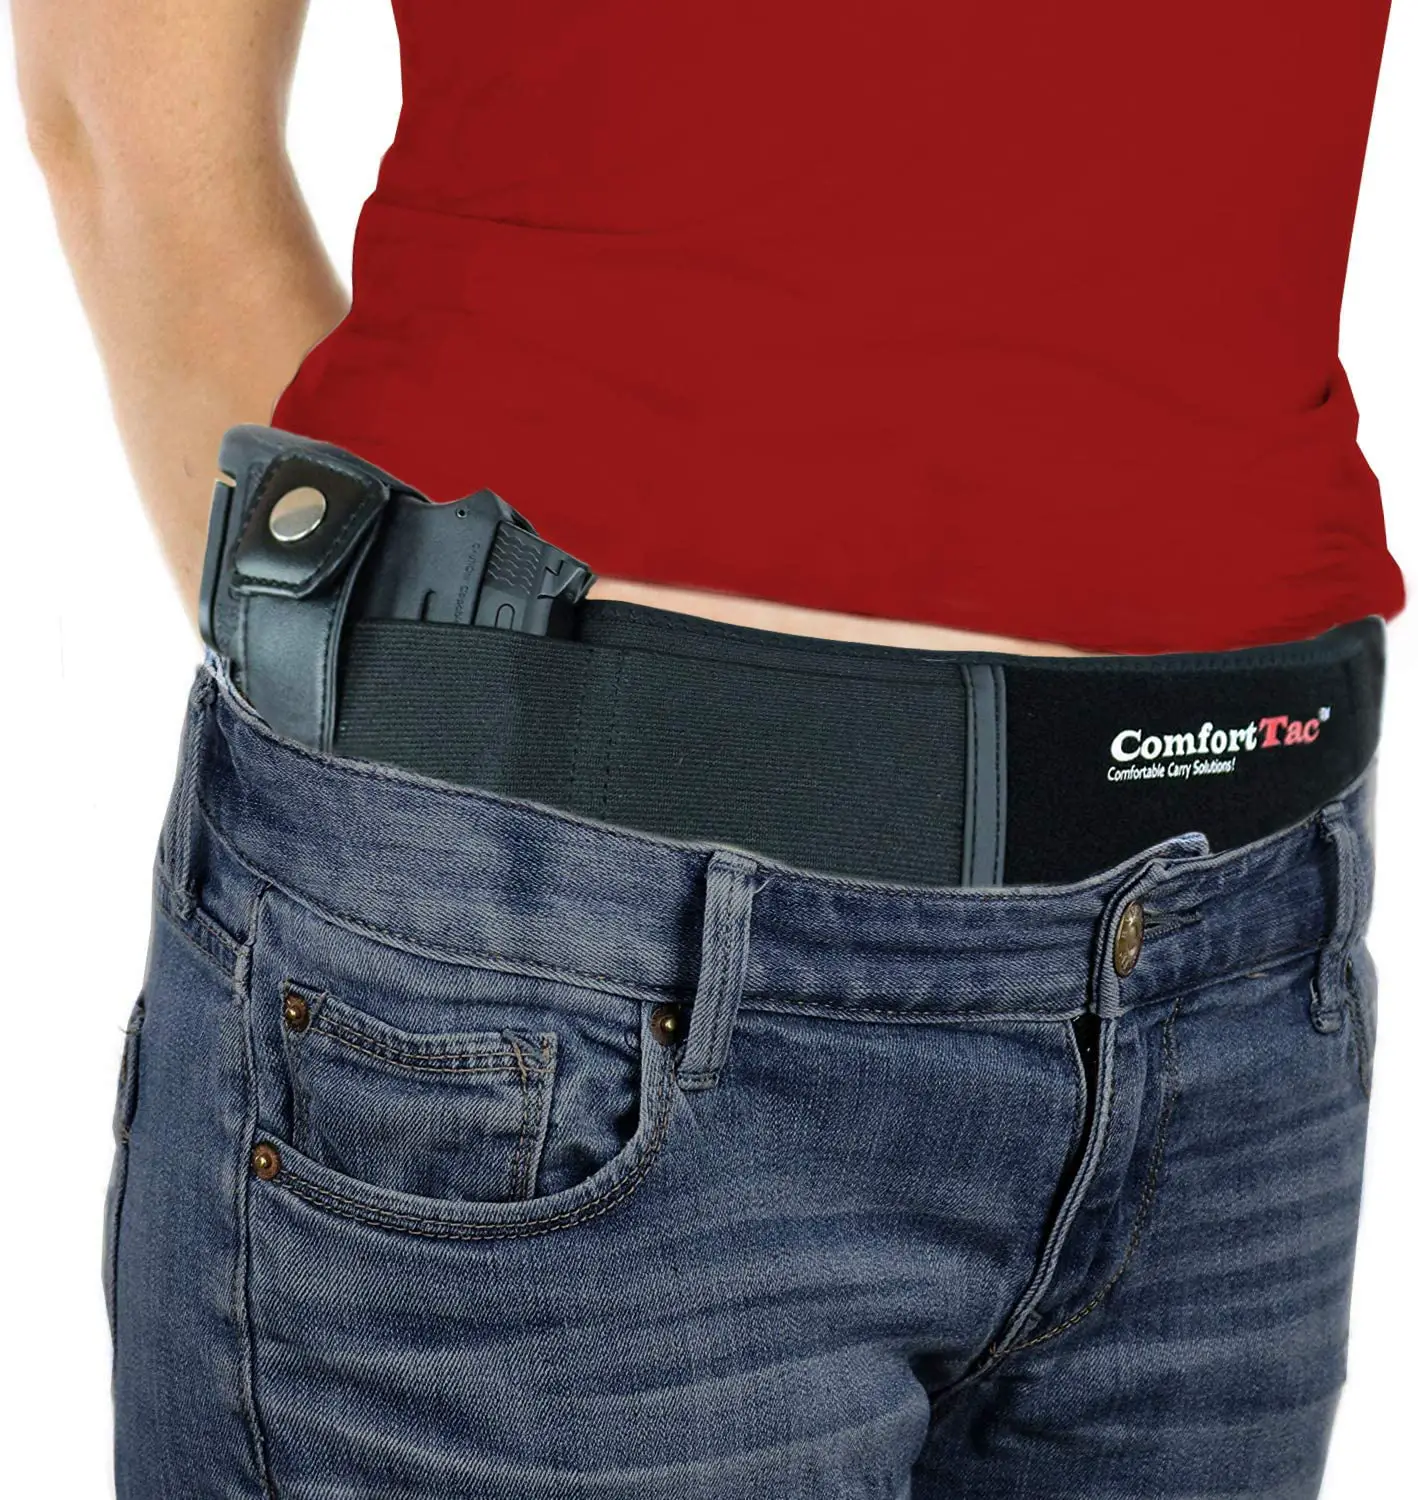 comfortack belly band gun glock 19 holster